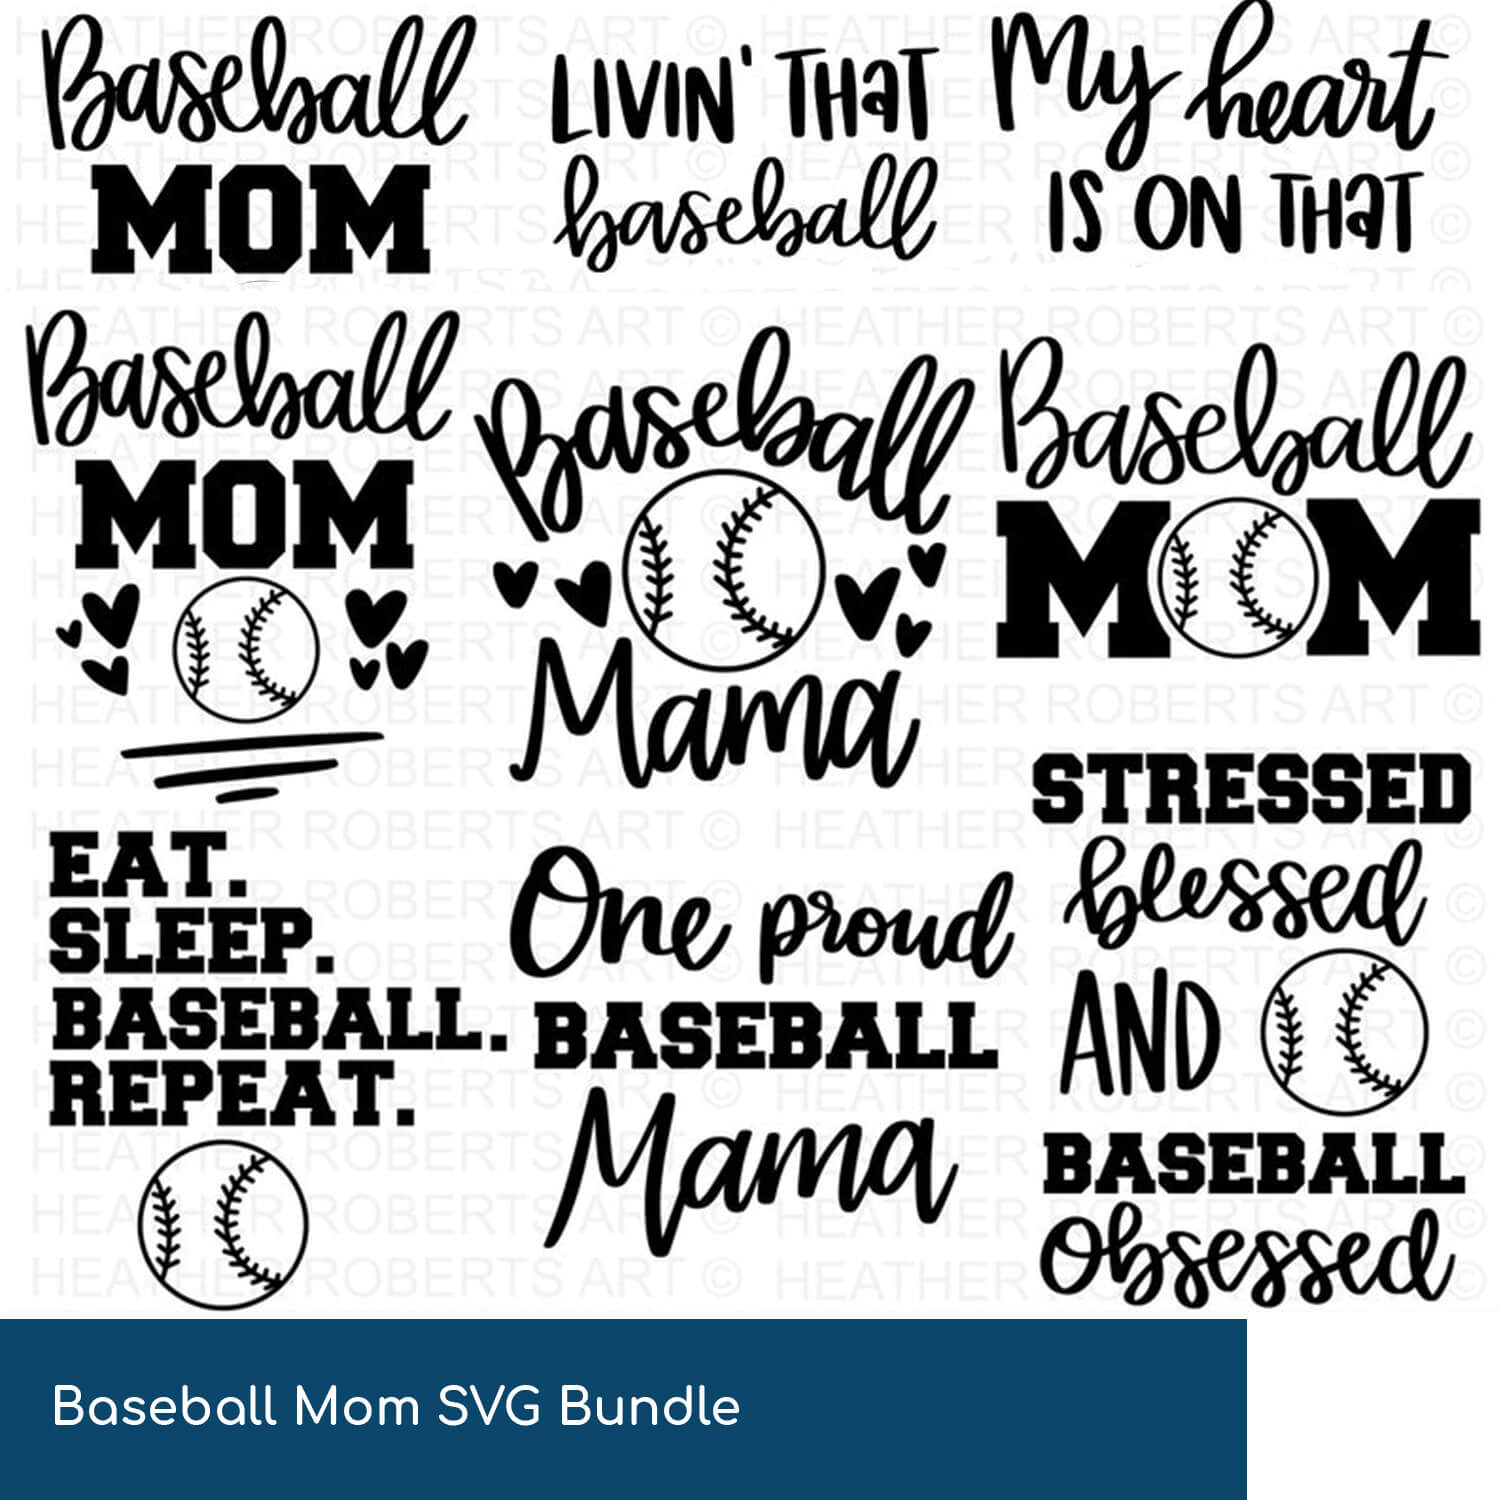 Many SVG Bundle of baseball mom.